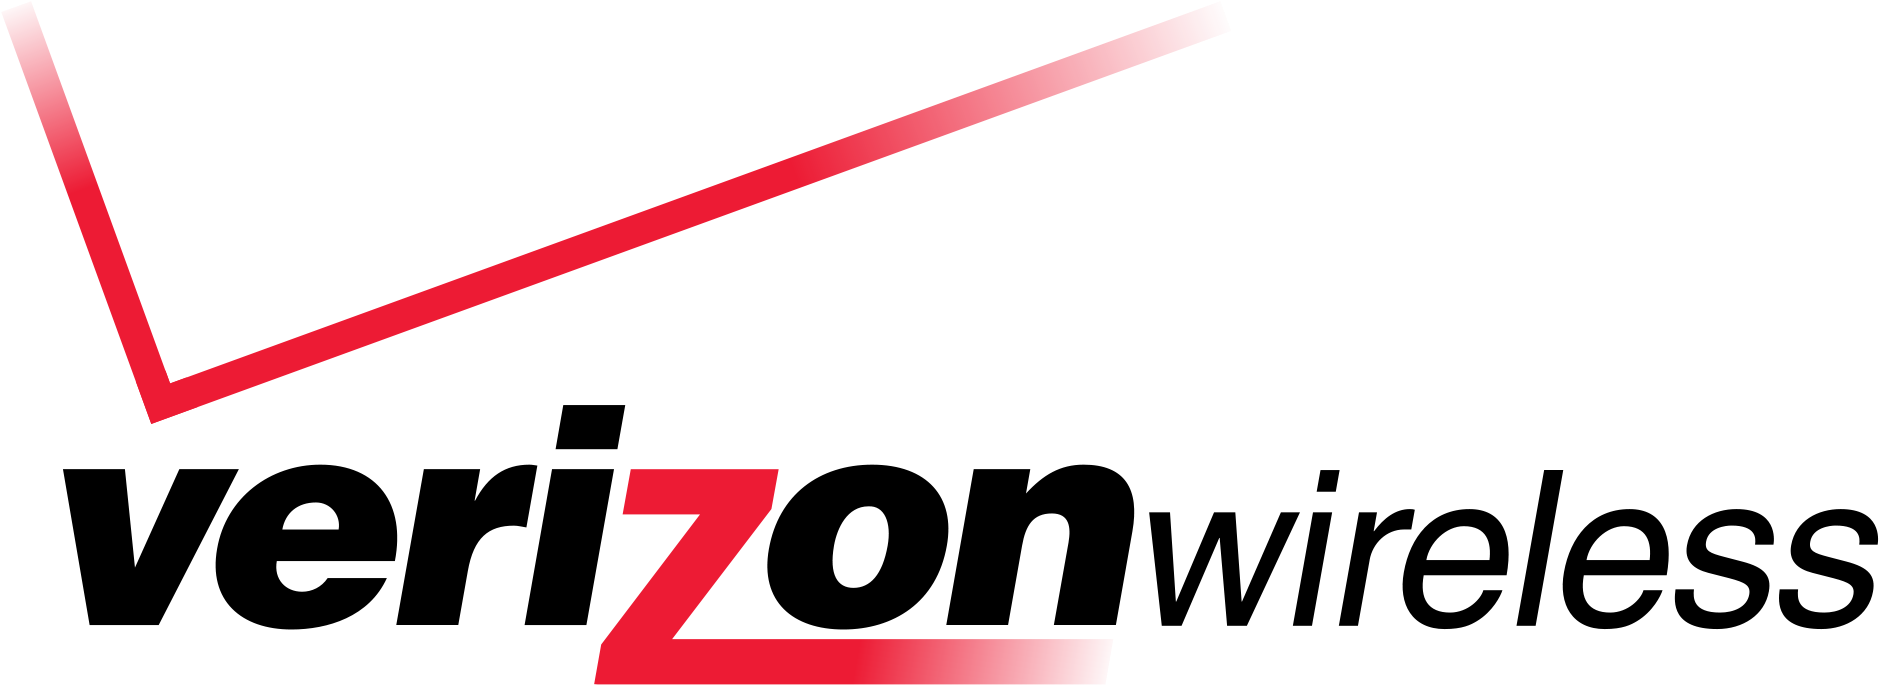 2000px Verizon Wireless Logo Forness Plans Plan Small - Verizon Wireless Logo 2015 (2000x790)